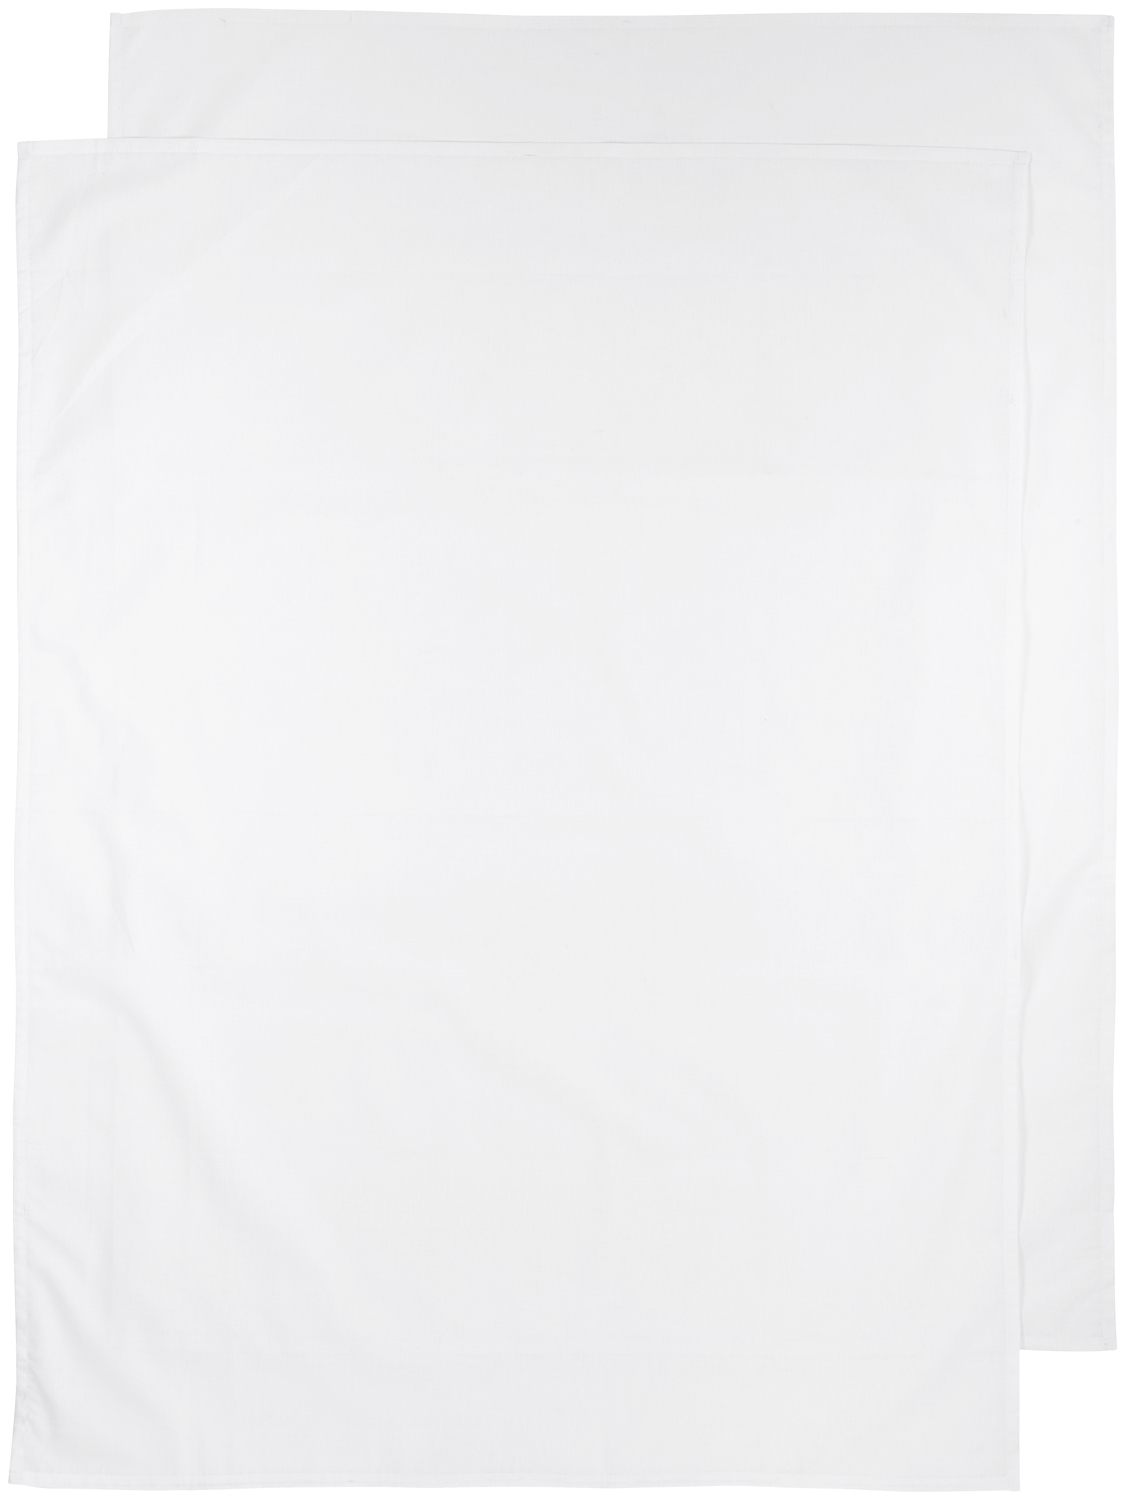 Wieglaken 2-pack Uni - white - 75x100cm